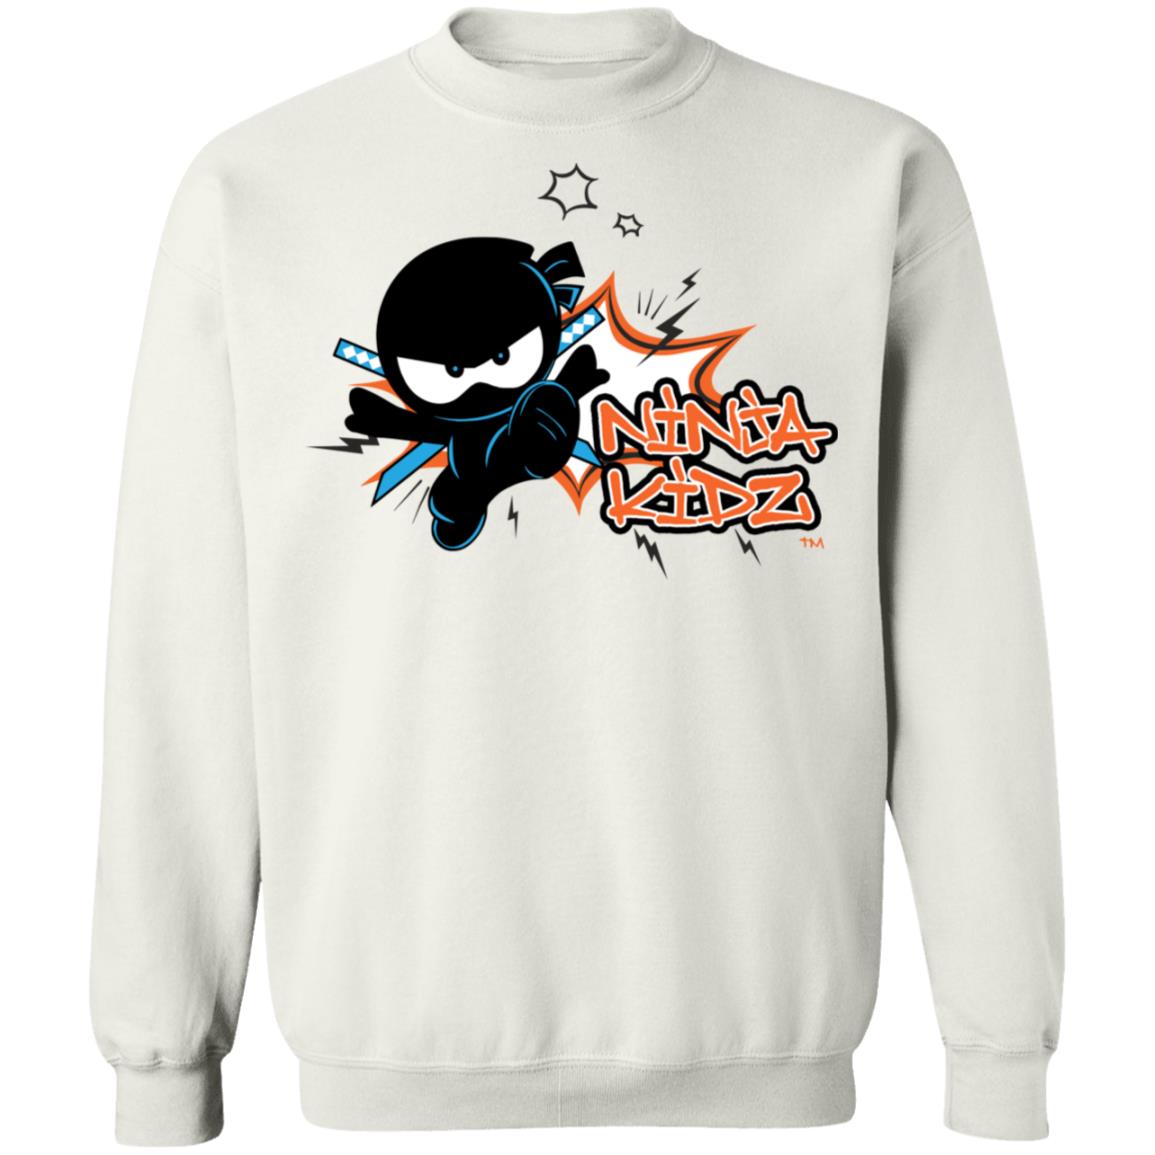 ninja-kids-merch-ninja-kidz-spark  Kids T-Shirt for Sale by KitsuneAMG